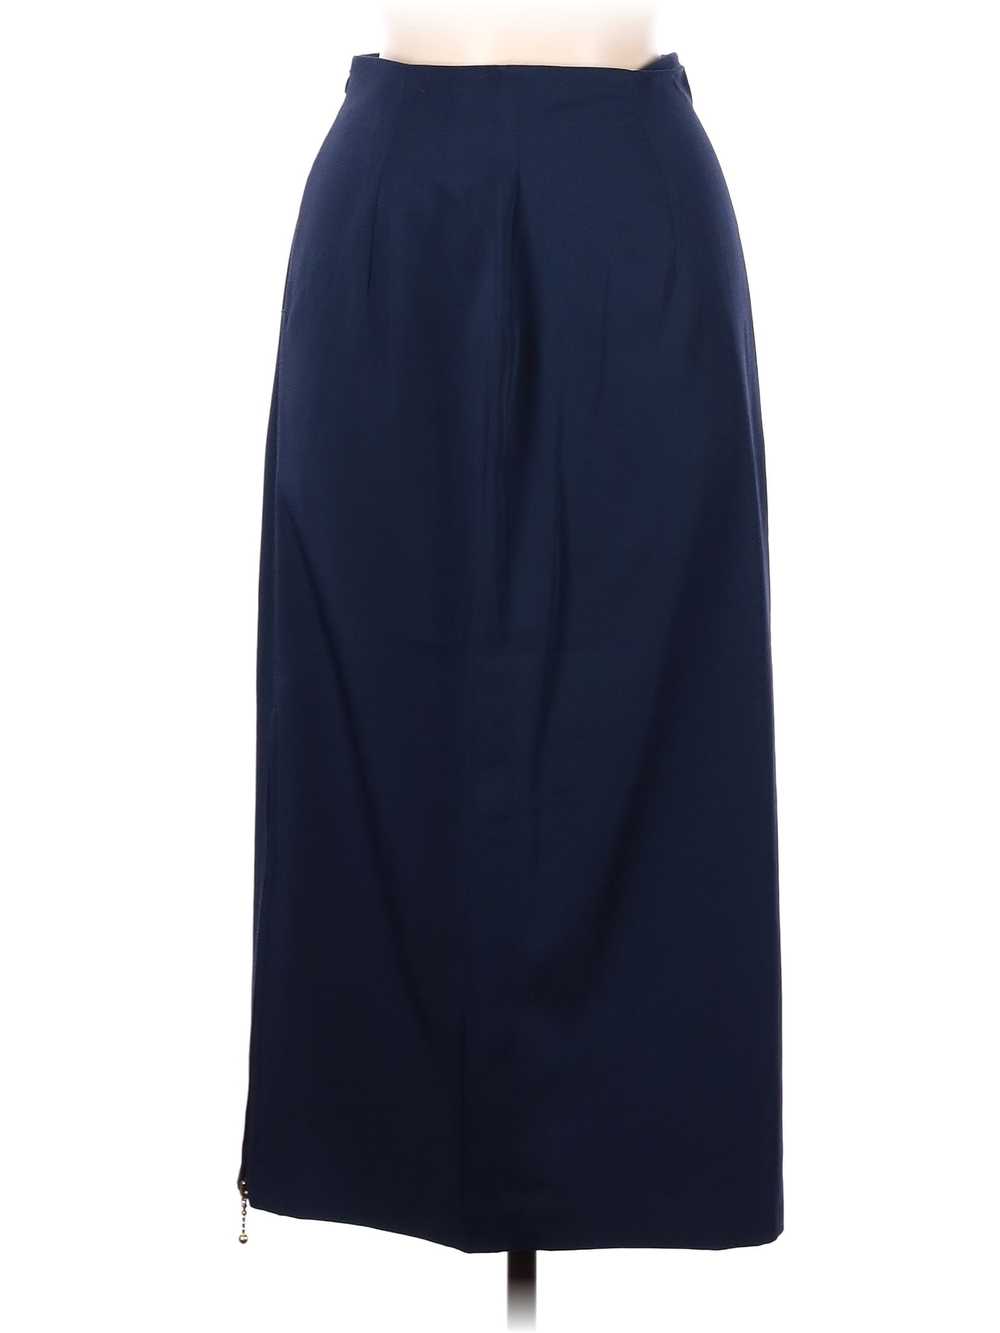 Laura Leigh ltd. Women Blue Casual Skirt 6 - image 1